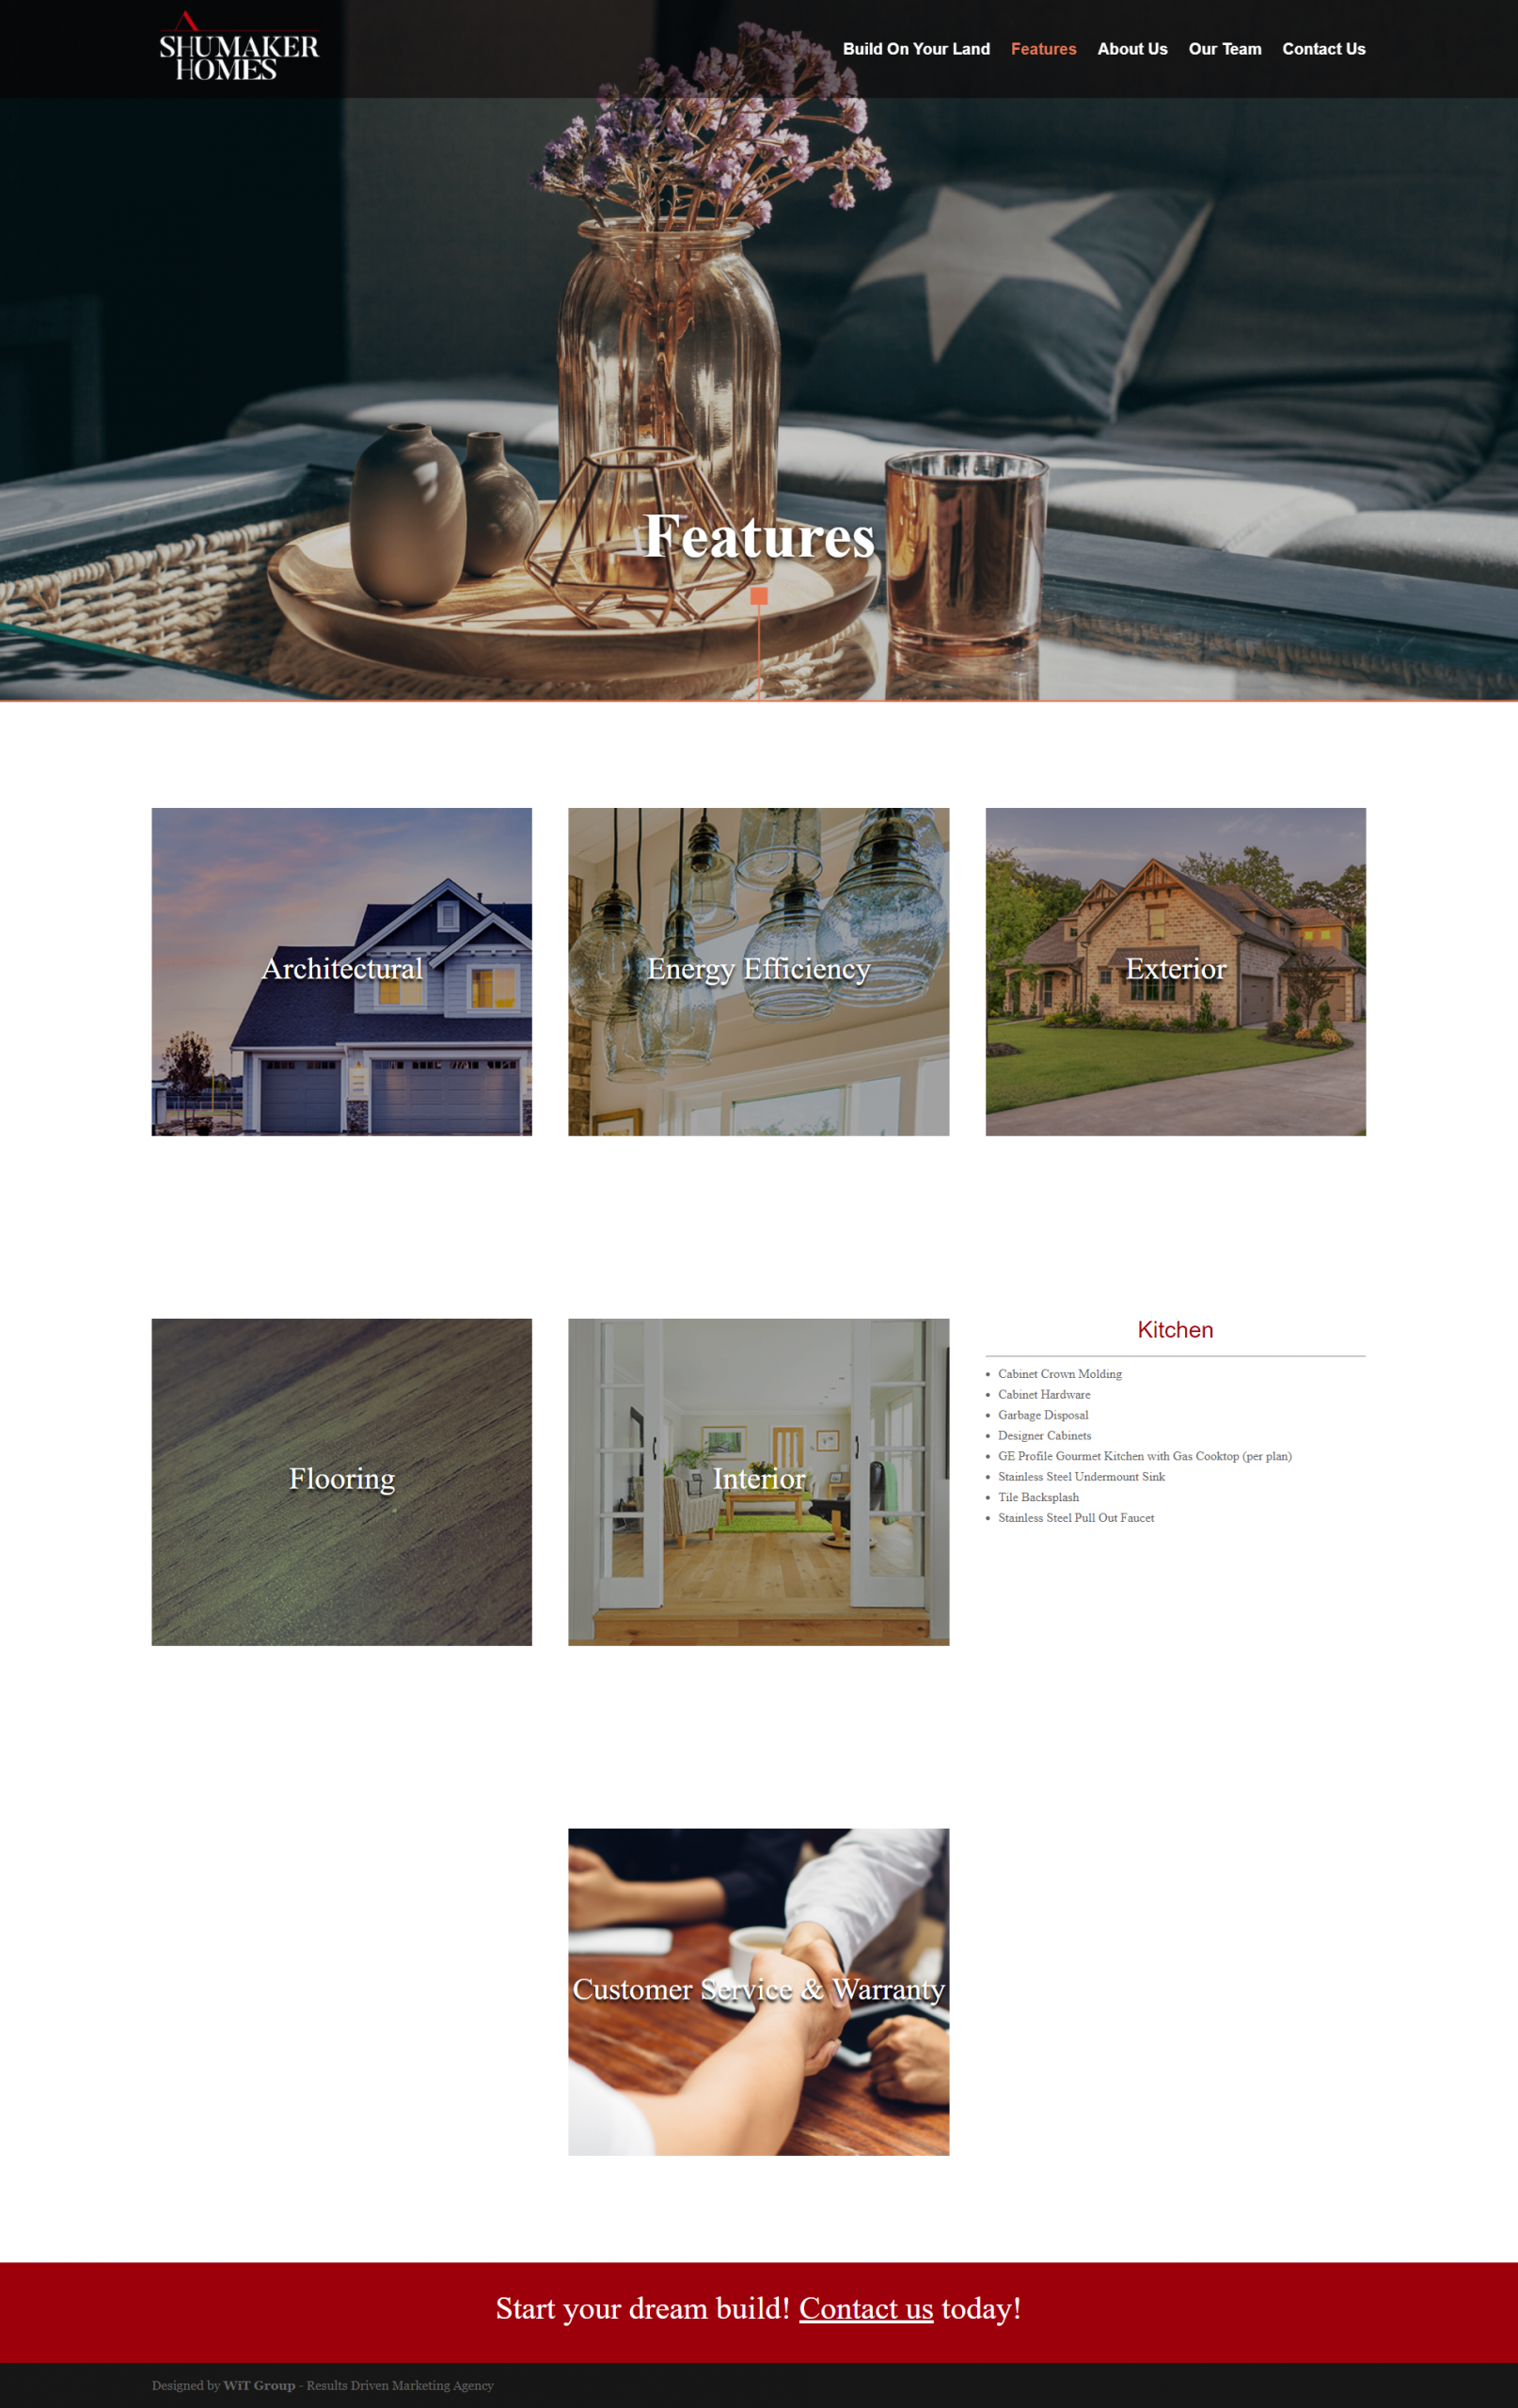 shumaker homes web design features